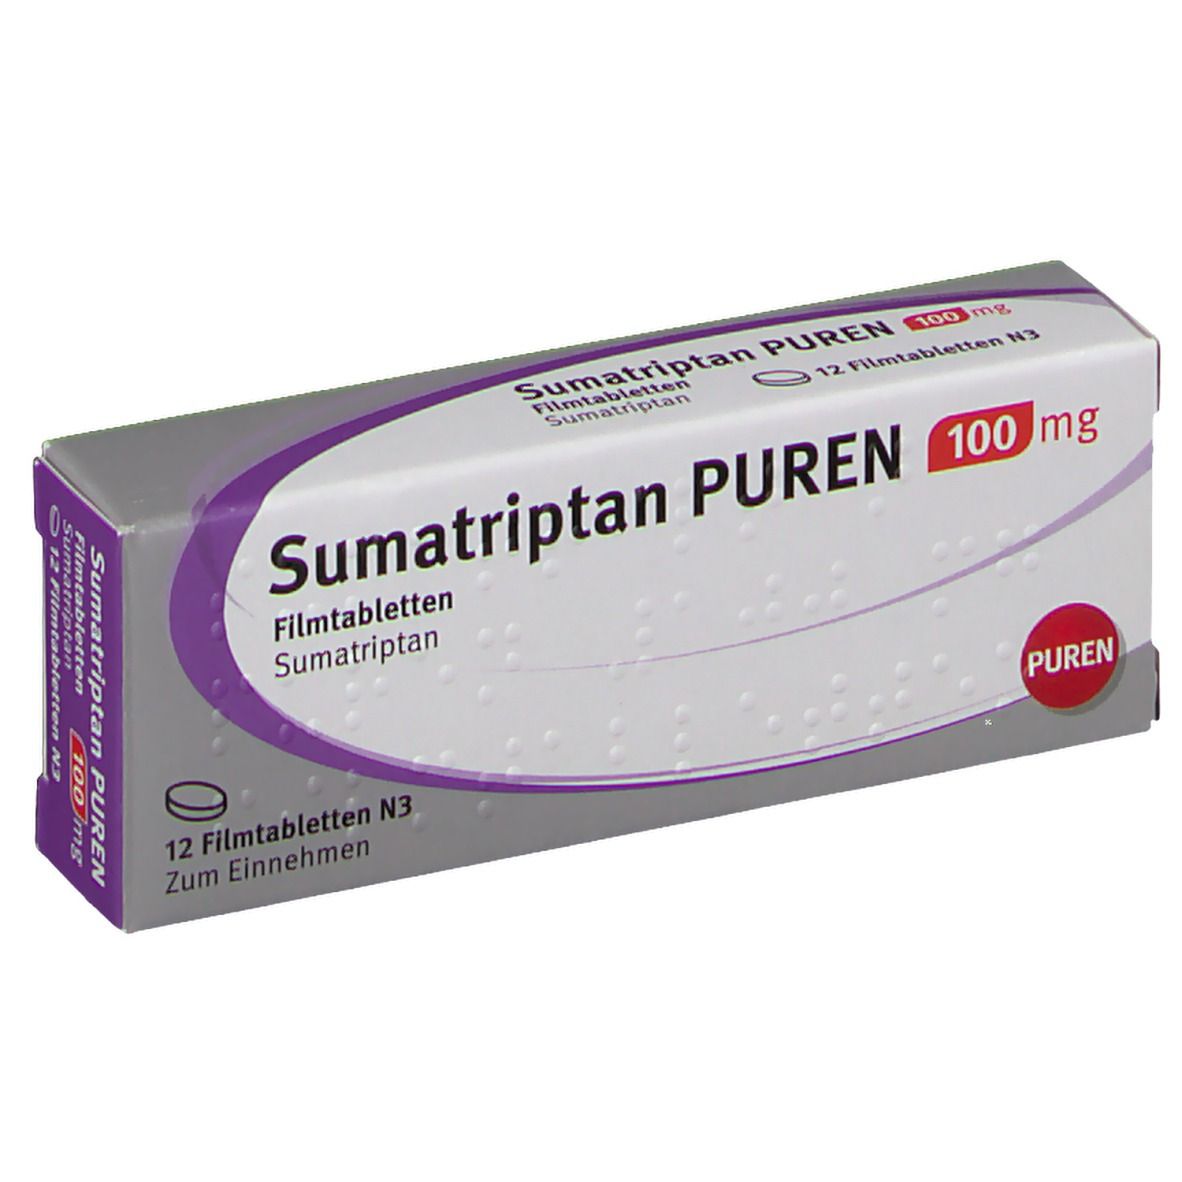 Sumatriptan PUREN 100 mg